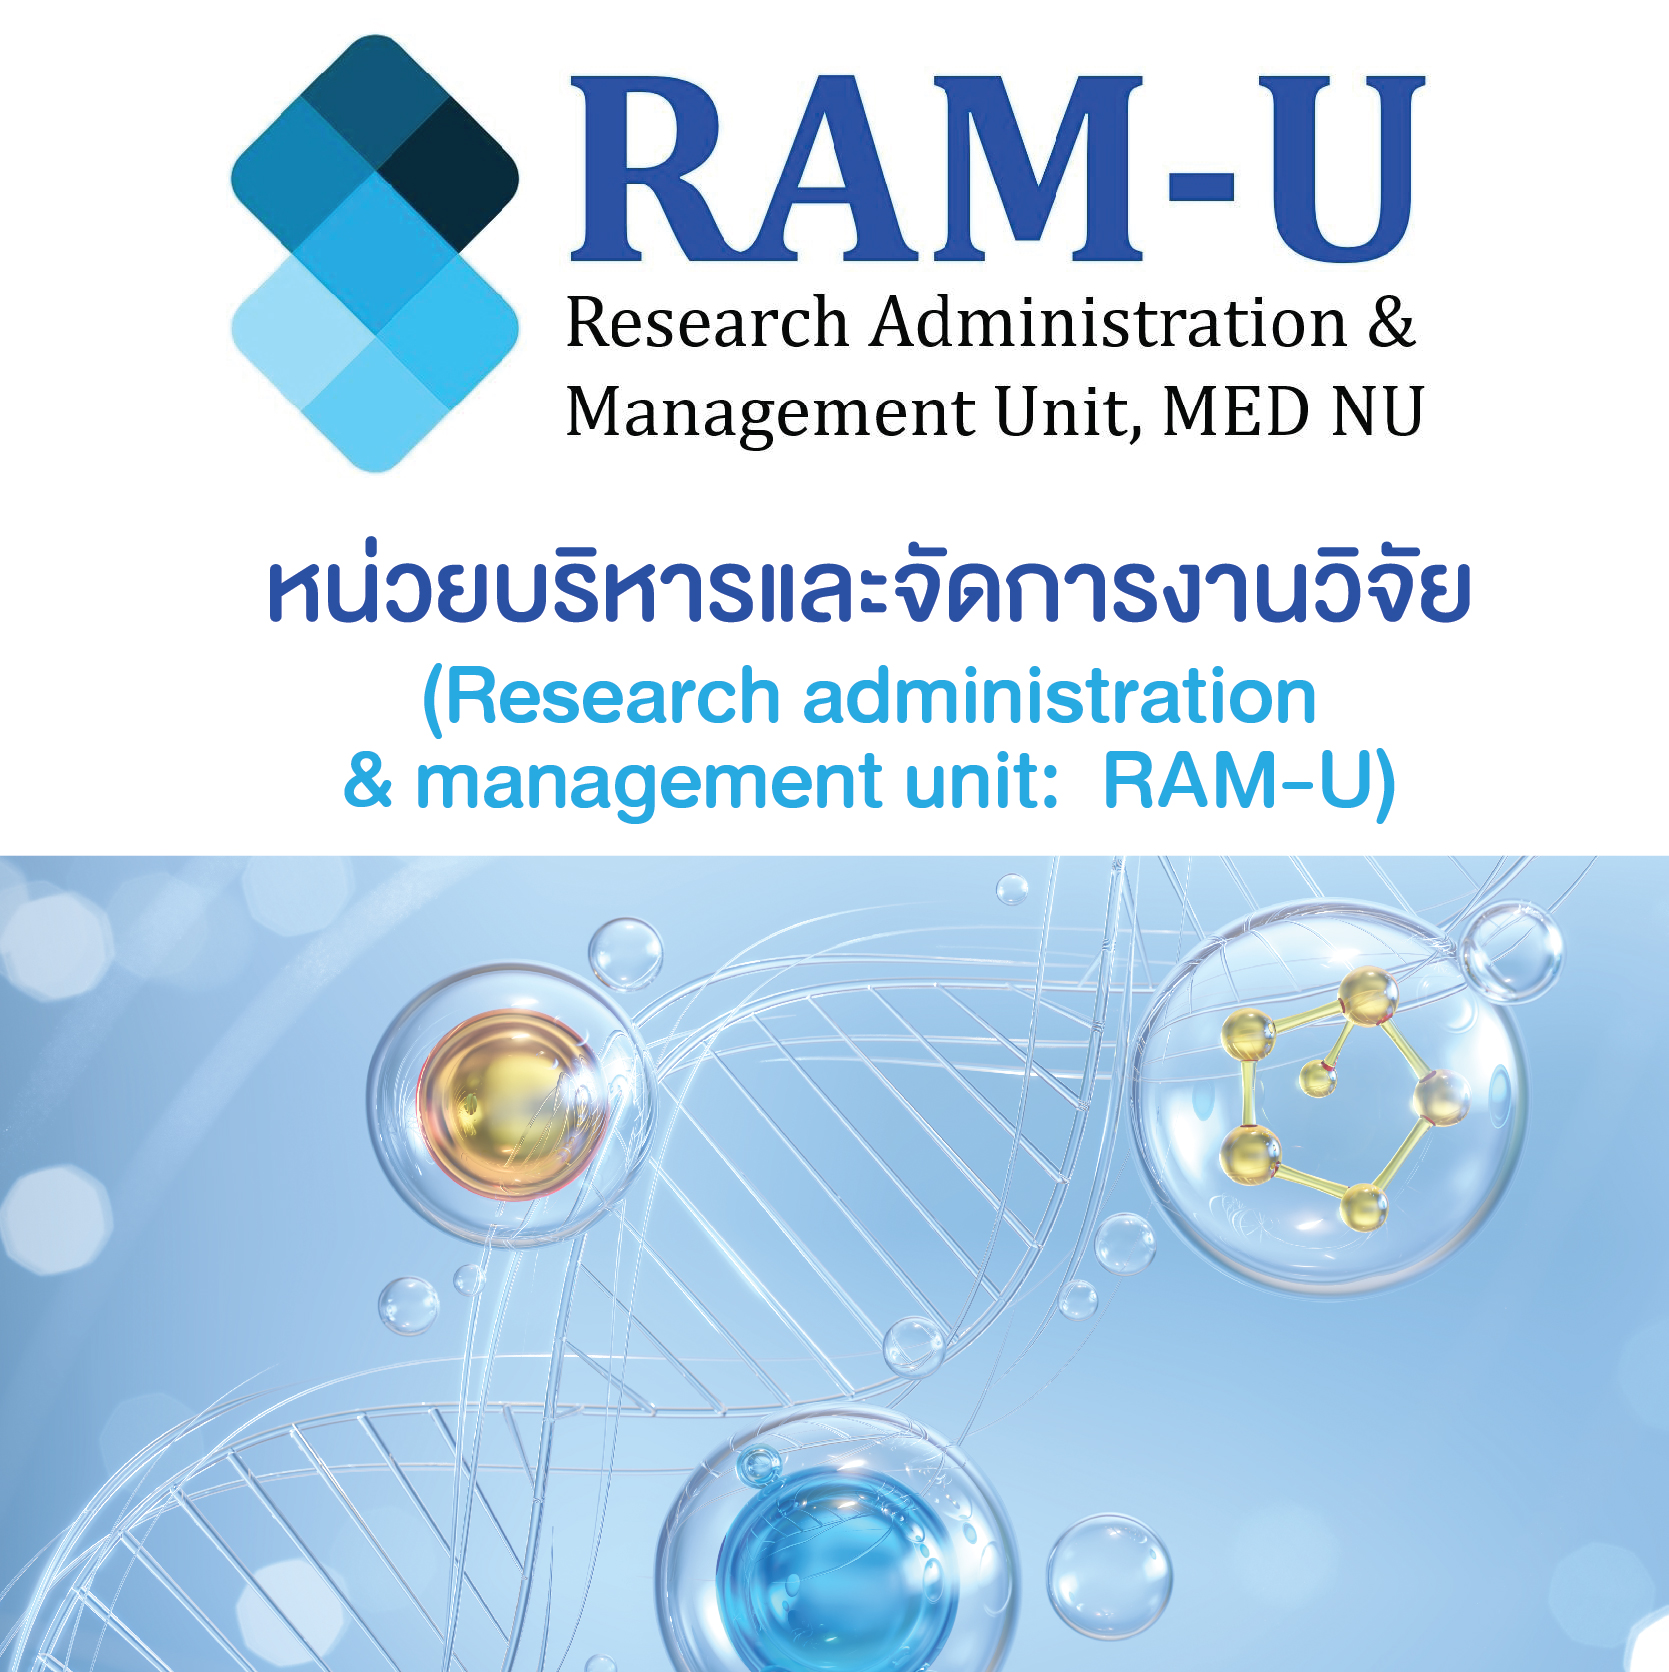 Research Administration & Management Unit: RAM-U